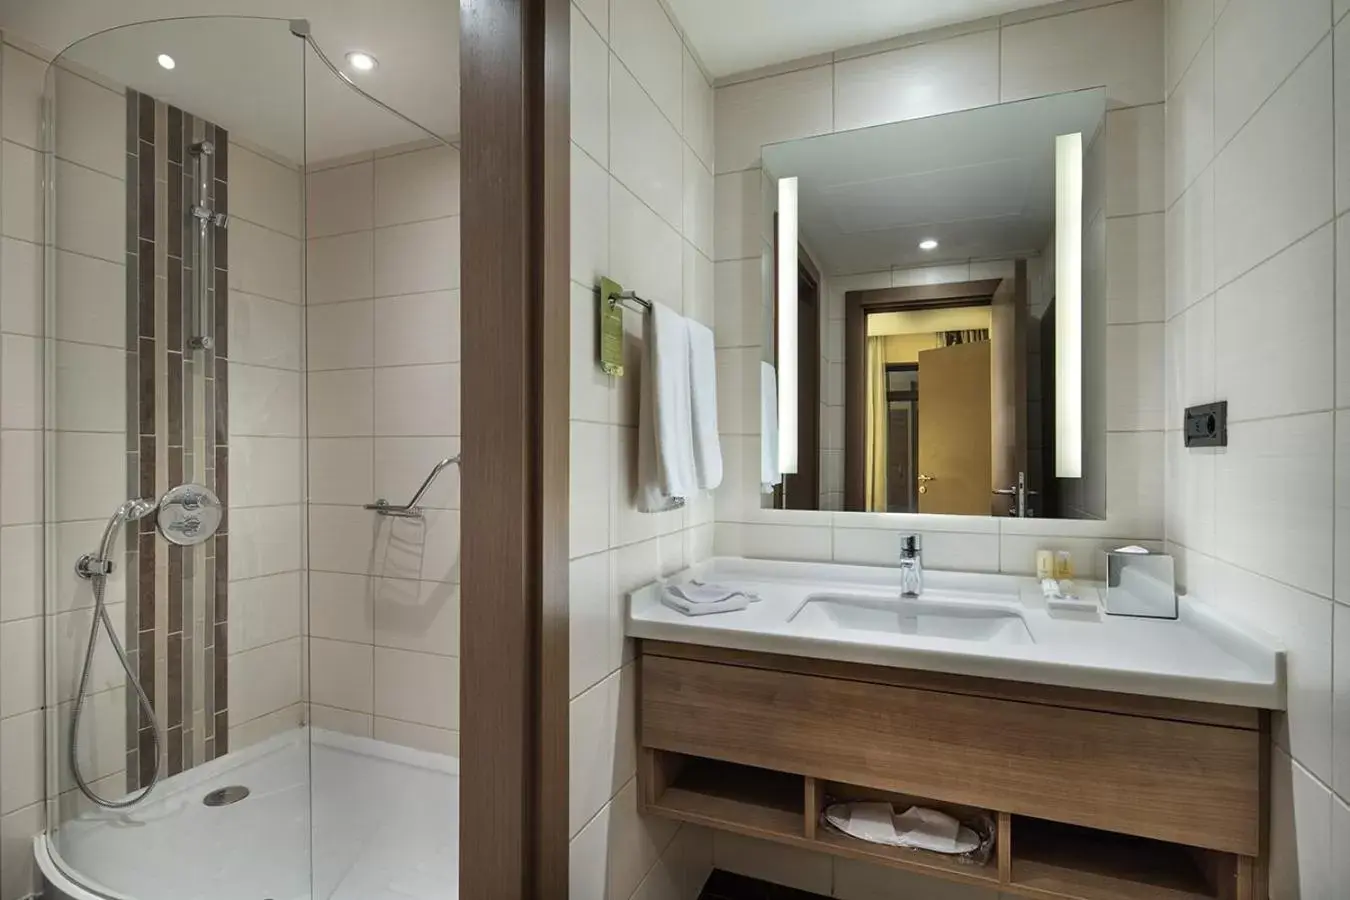 Shower, Bathroom in Dosso Dossi Hotels Golden Horn